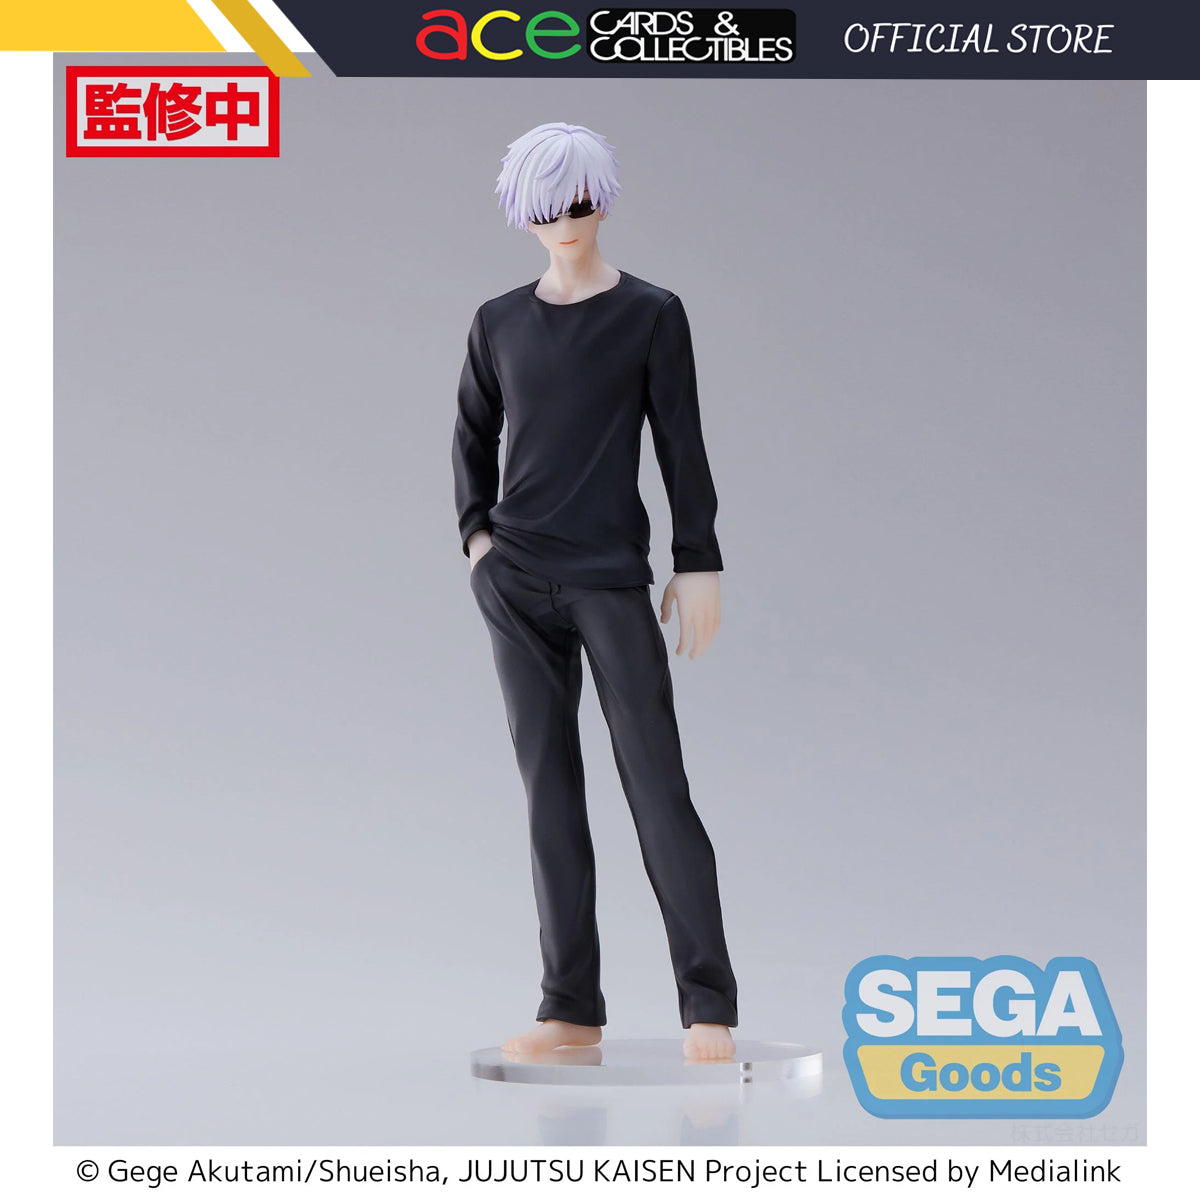 Jujutsu Kaisen Figurizm "Satoru Gojo"-Sega-Ace Cards & Collectibles